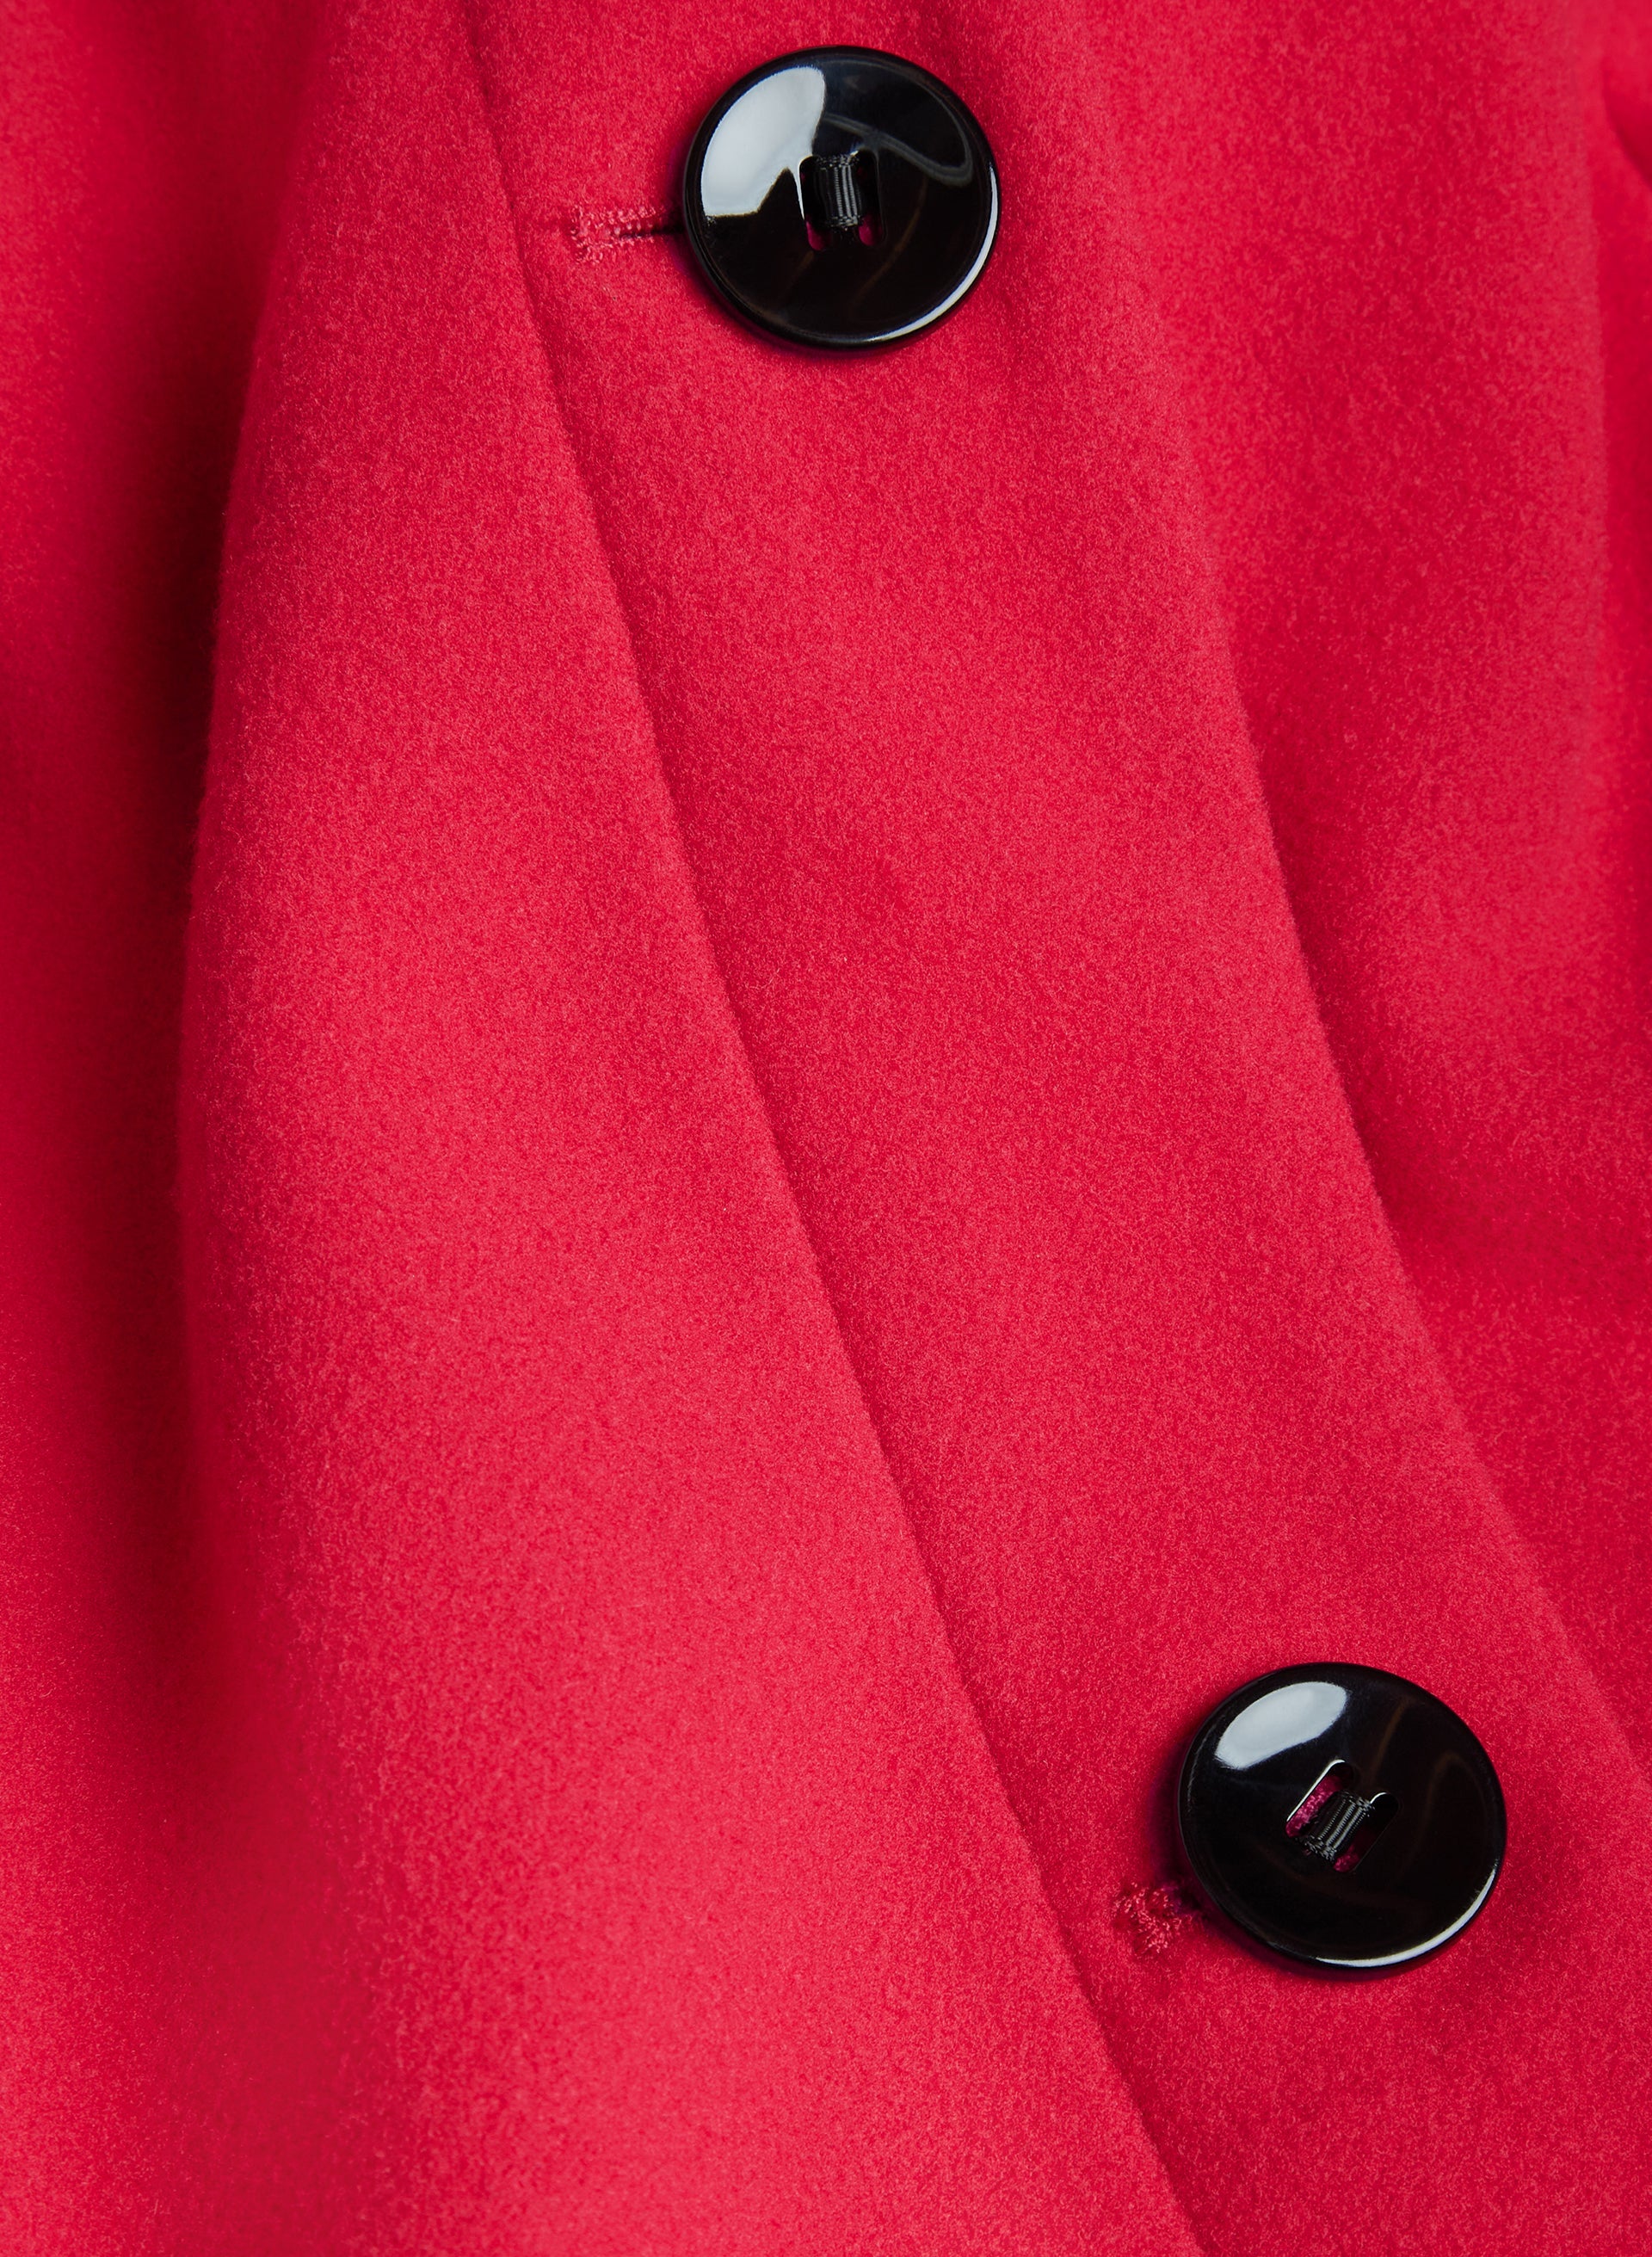 NECHOLOGY Petite Jackets Woman Artificial Wool Coat Lapel Elegant